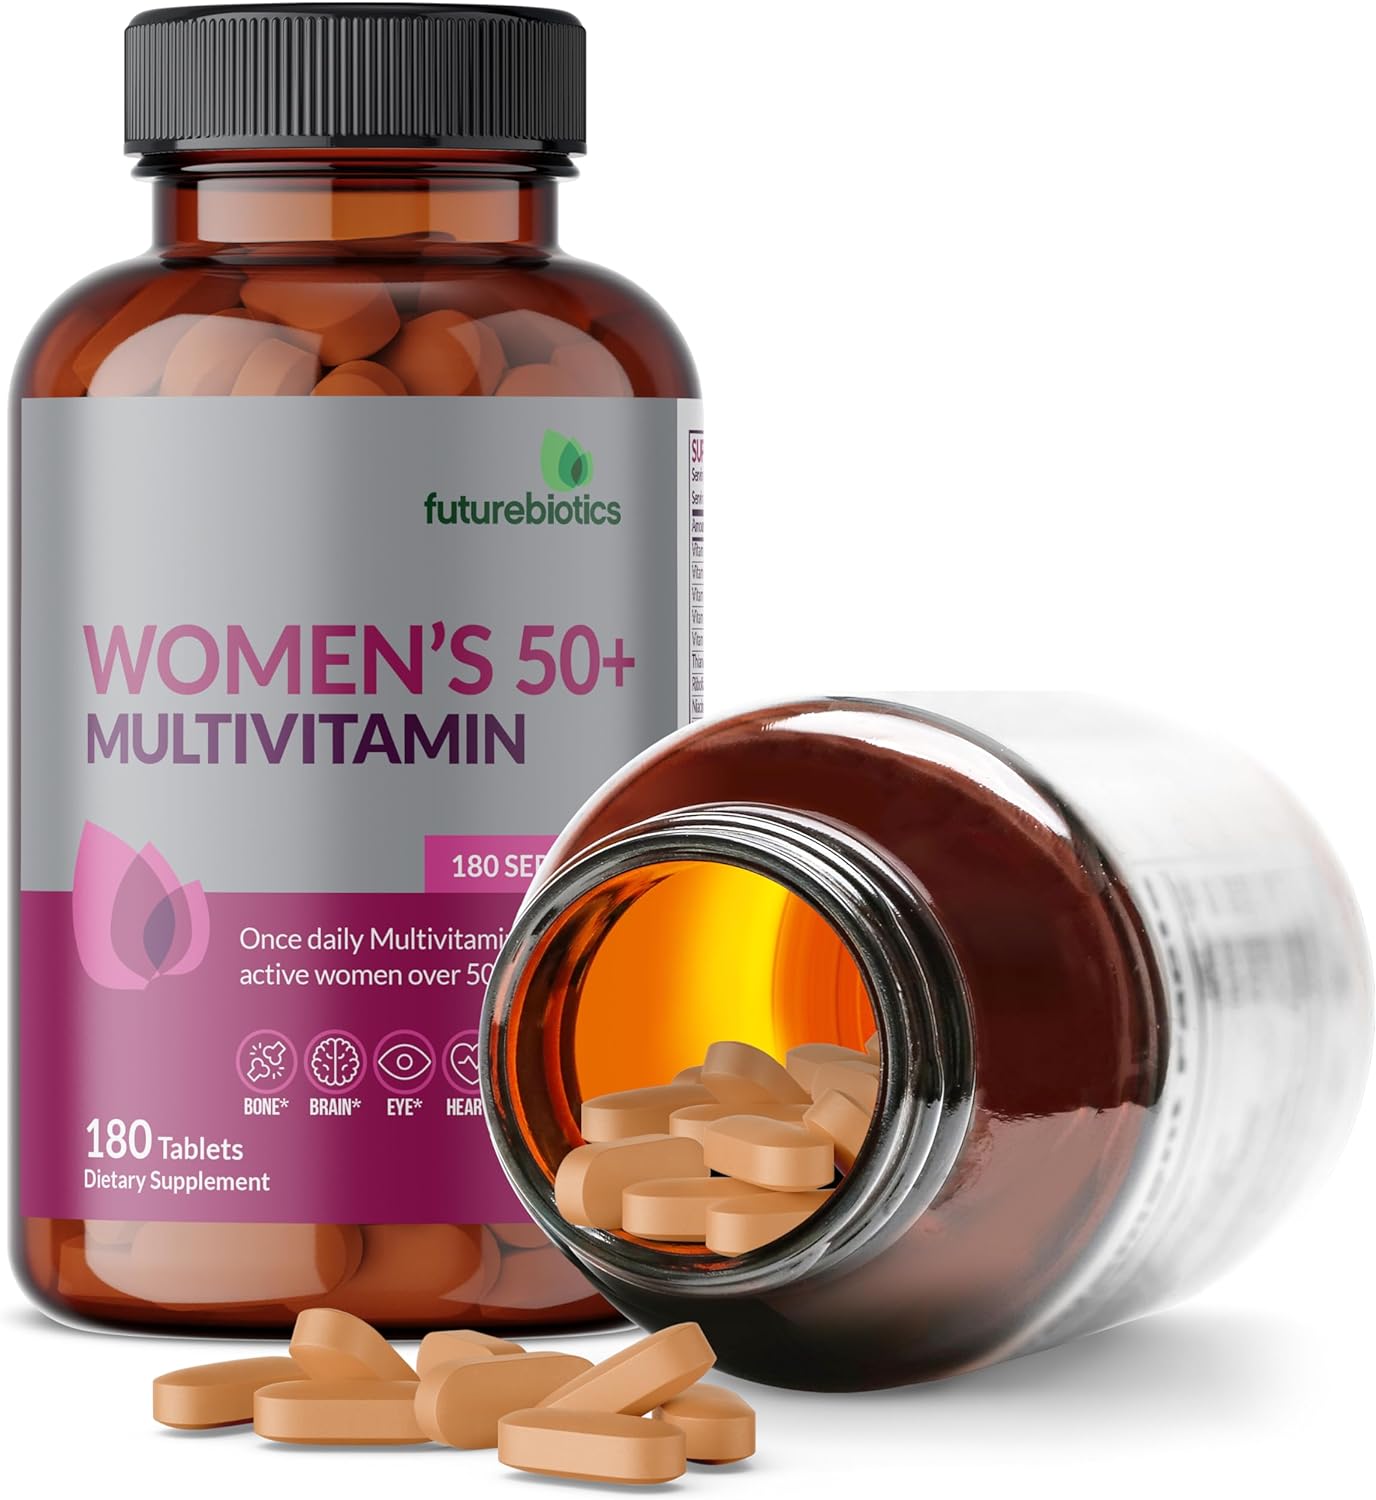 Futurebiotics Women's 50+ Multivitamin Once Daily Multivitamin for Act